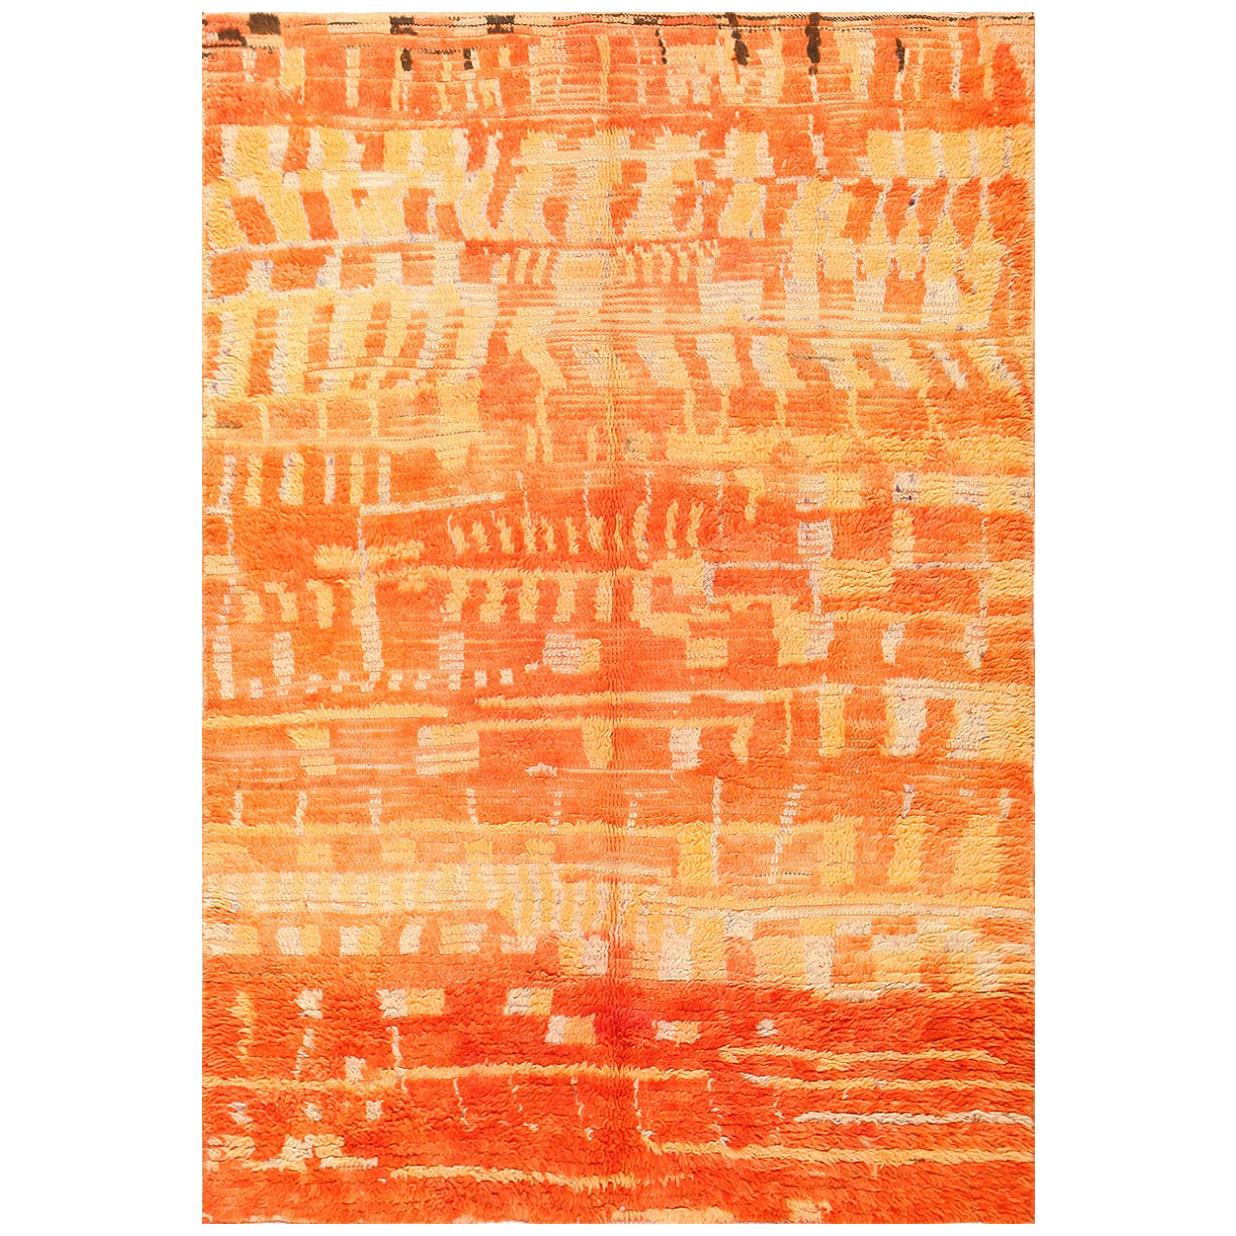 Burnt Orange Shaggy Vintage Moroccan Berber Rug. Size: 4 ft 6 in x 6 ft 6 in